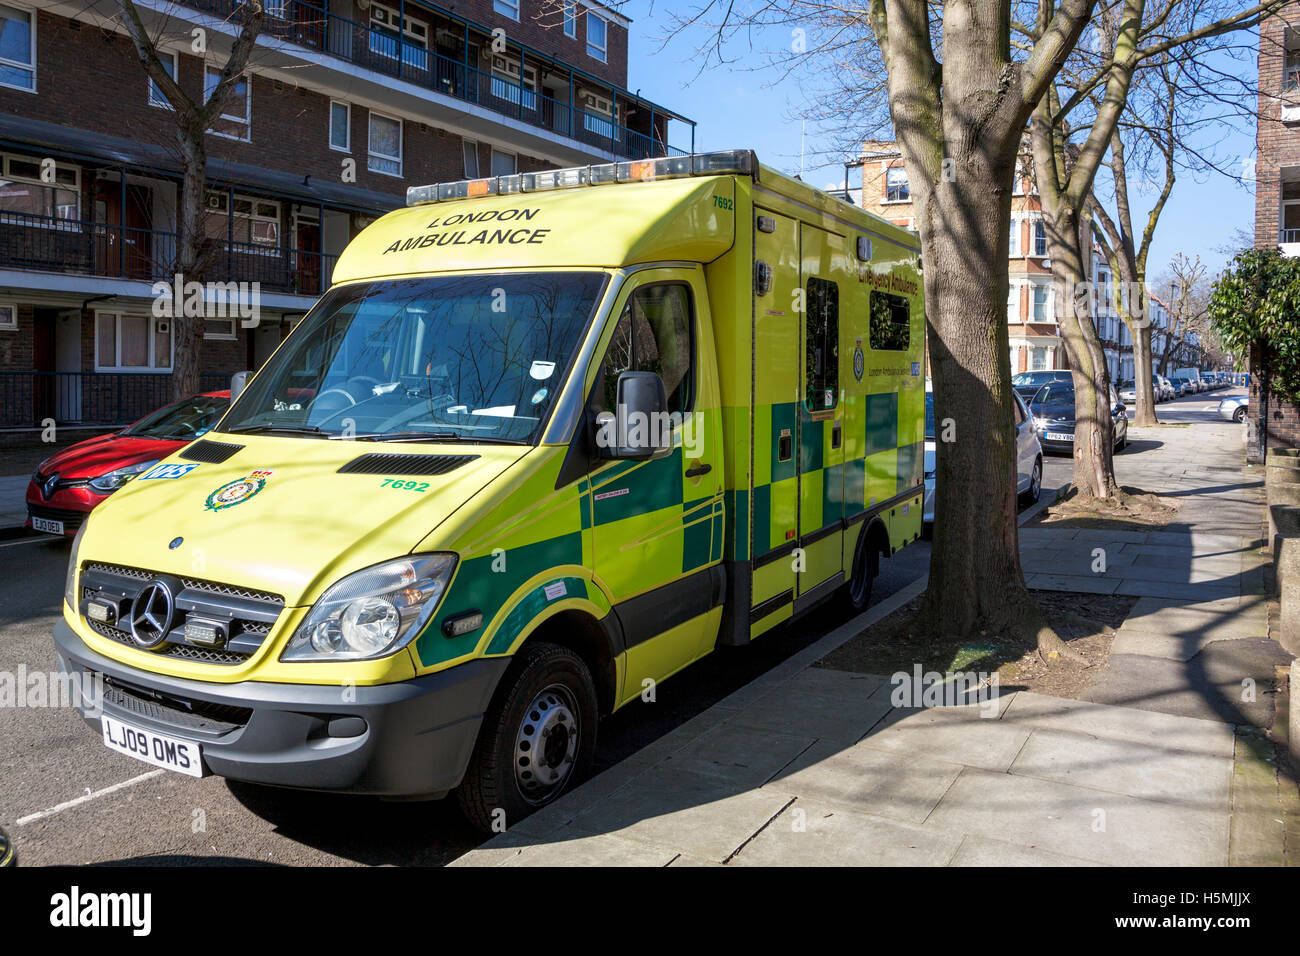 Ambulance parked on a Camden Street, London, UK Stock Photo